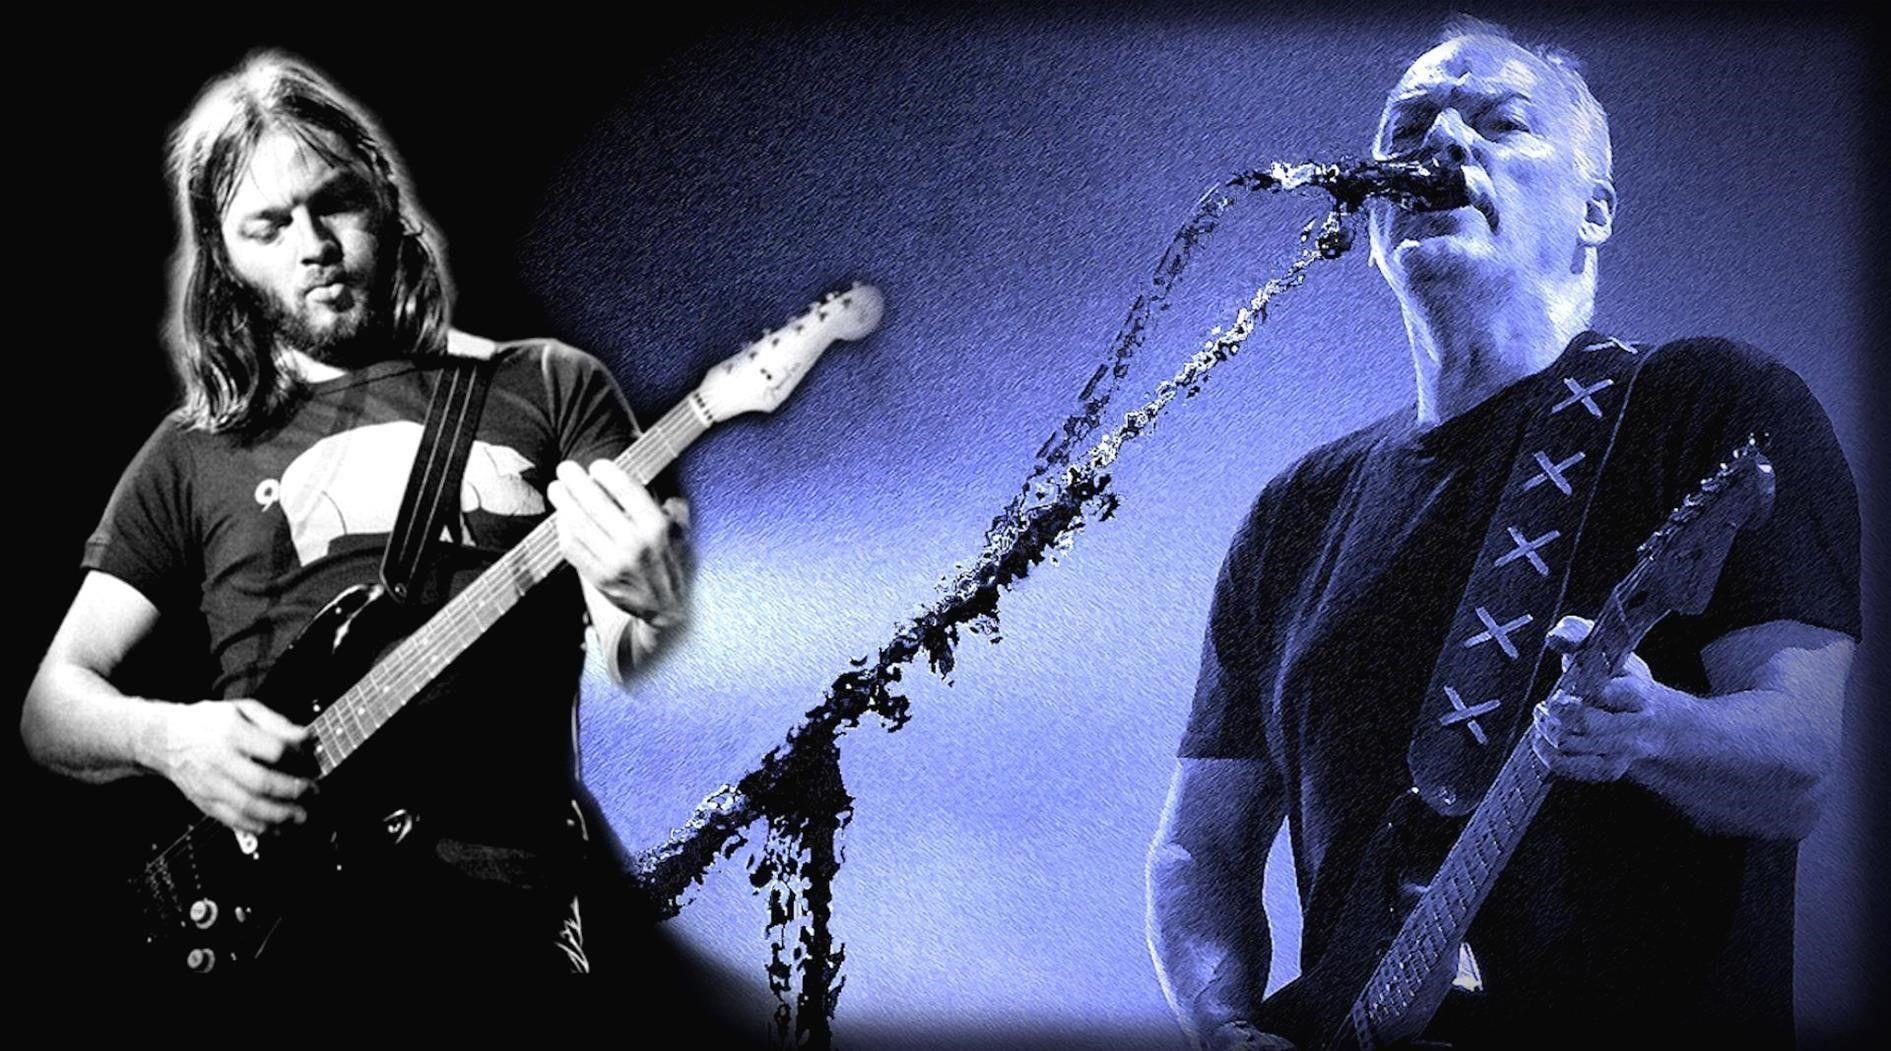 Best HD Photo Wallpaper Pics of David Gilmour. Best Pink Floyd